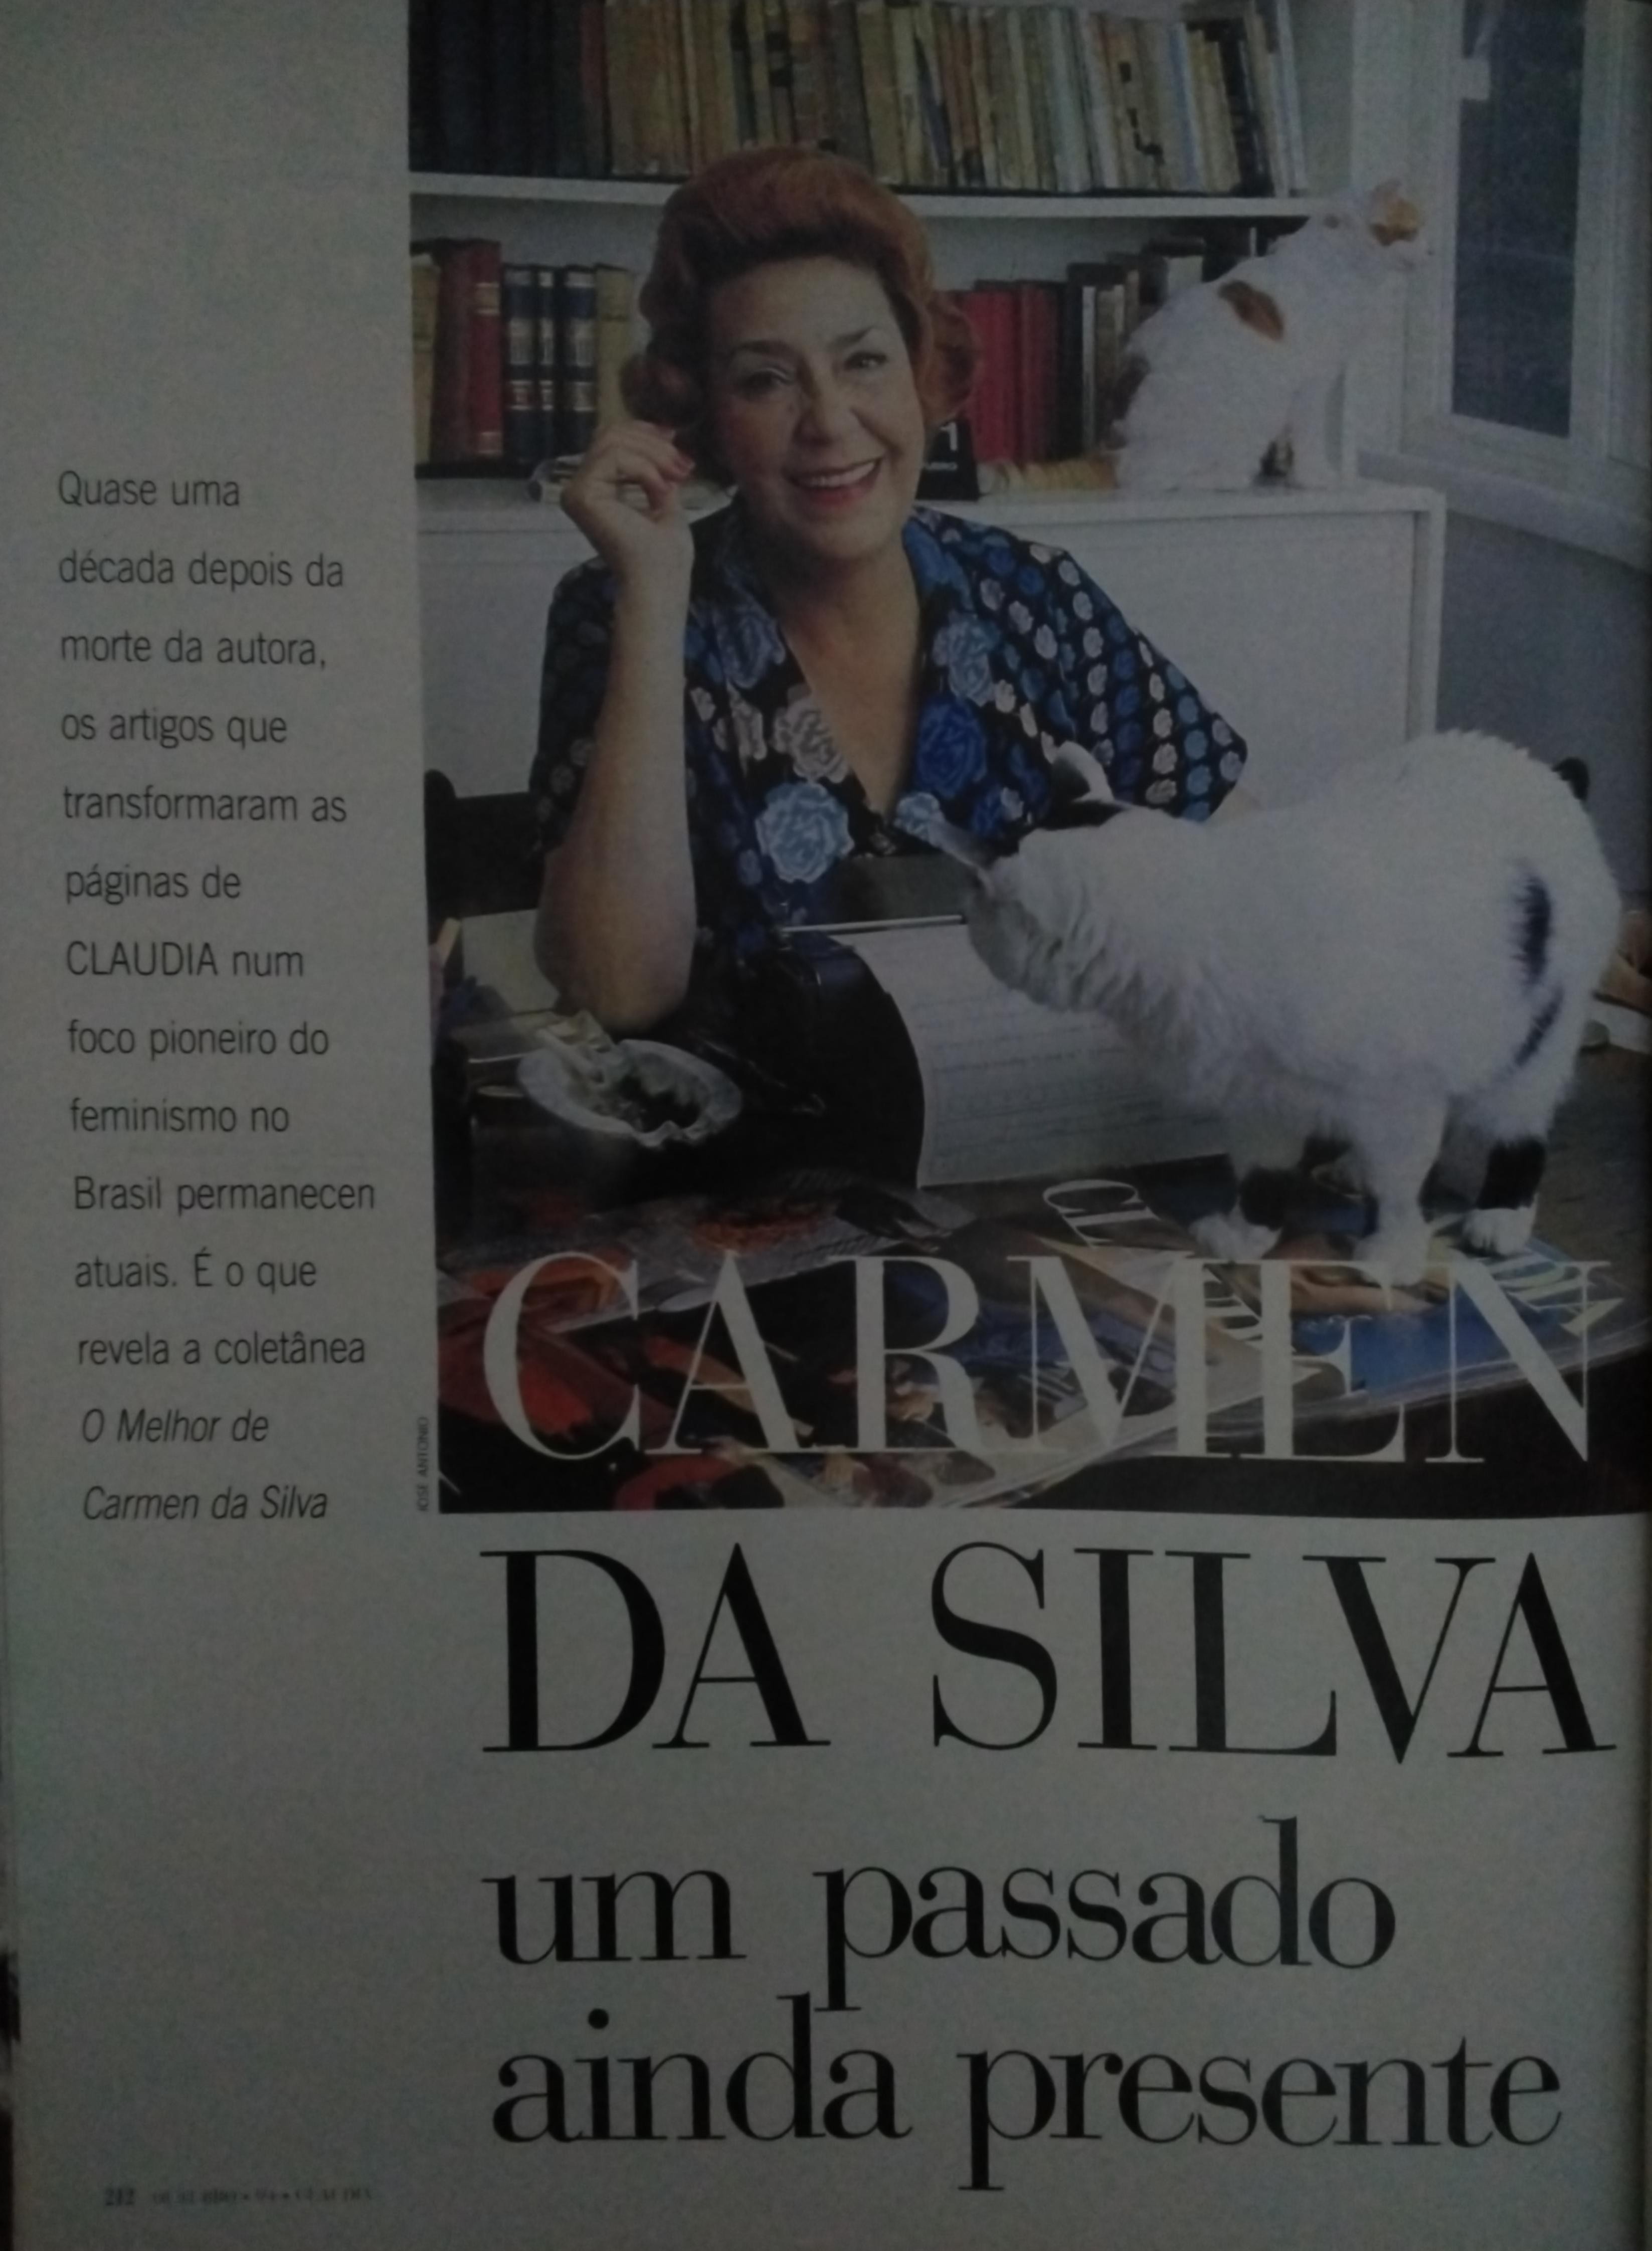 Revista Claudia, nº 397, outubro de 1994. Pg. 212.